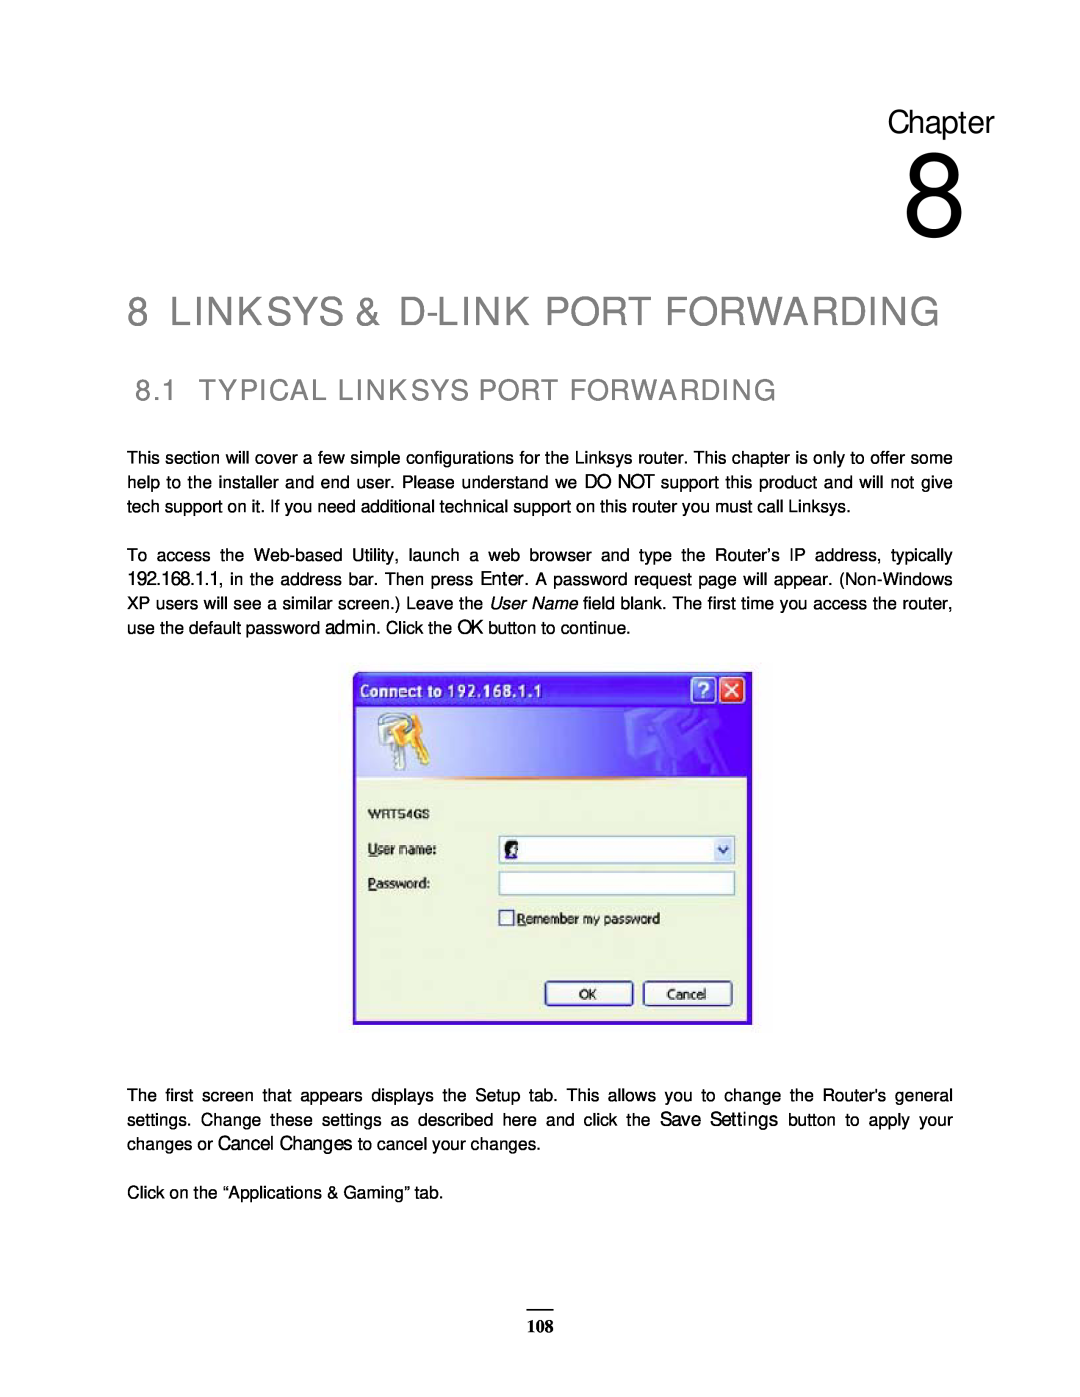 EverFocus EMV400 user manual Linksys & D-Link Port Forwarding, Typical Linksys Port Forwarding, Chapter 